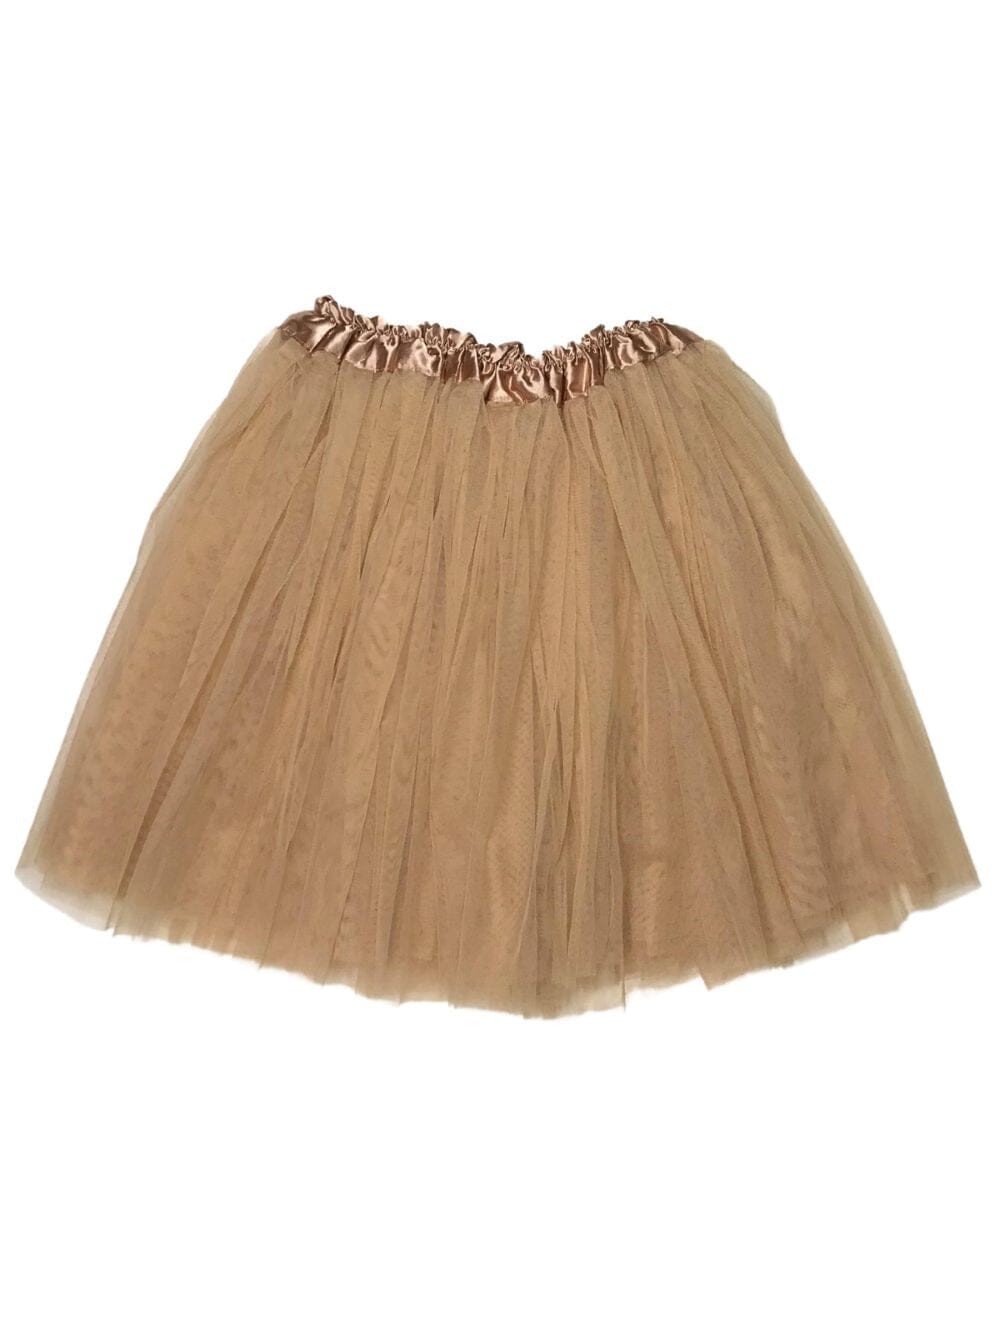 Taupe Plus Size Adult Tutu Skirt - Women's Plus Size 3- Layer Basic Ballet Costume Dance Tutus - Sydney So Sweet